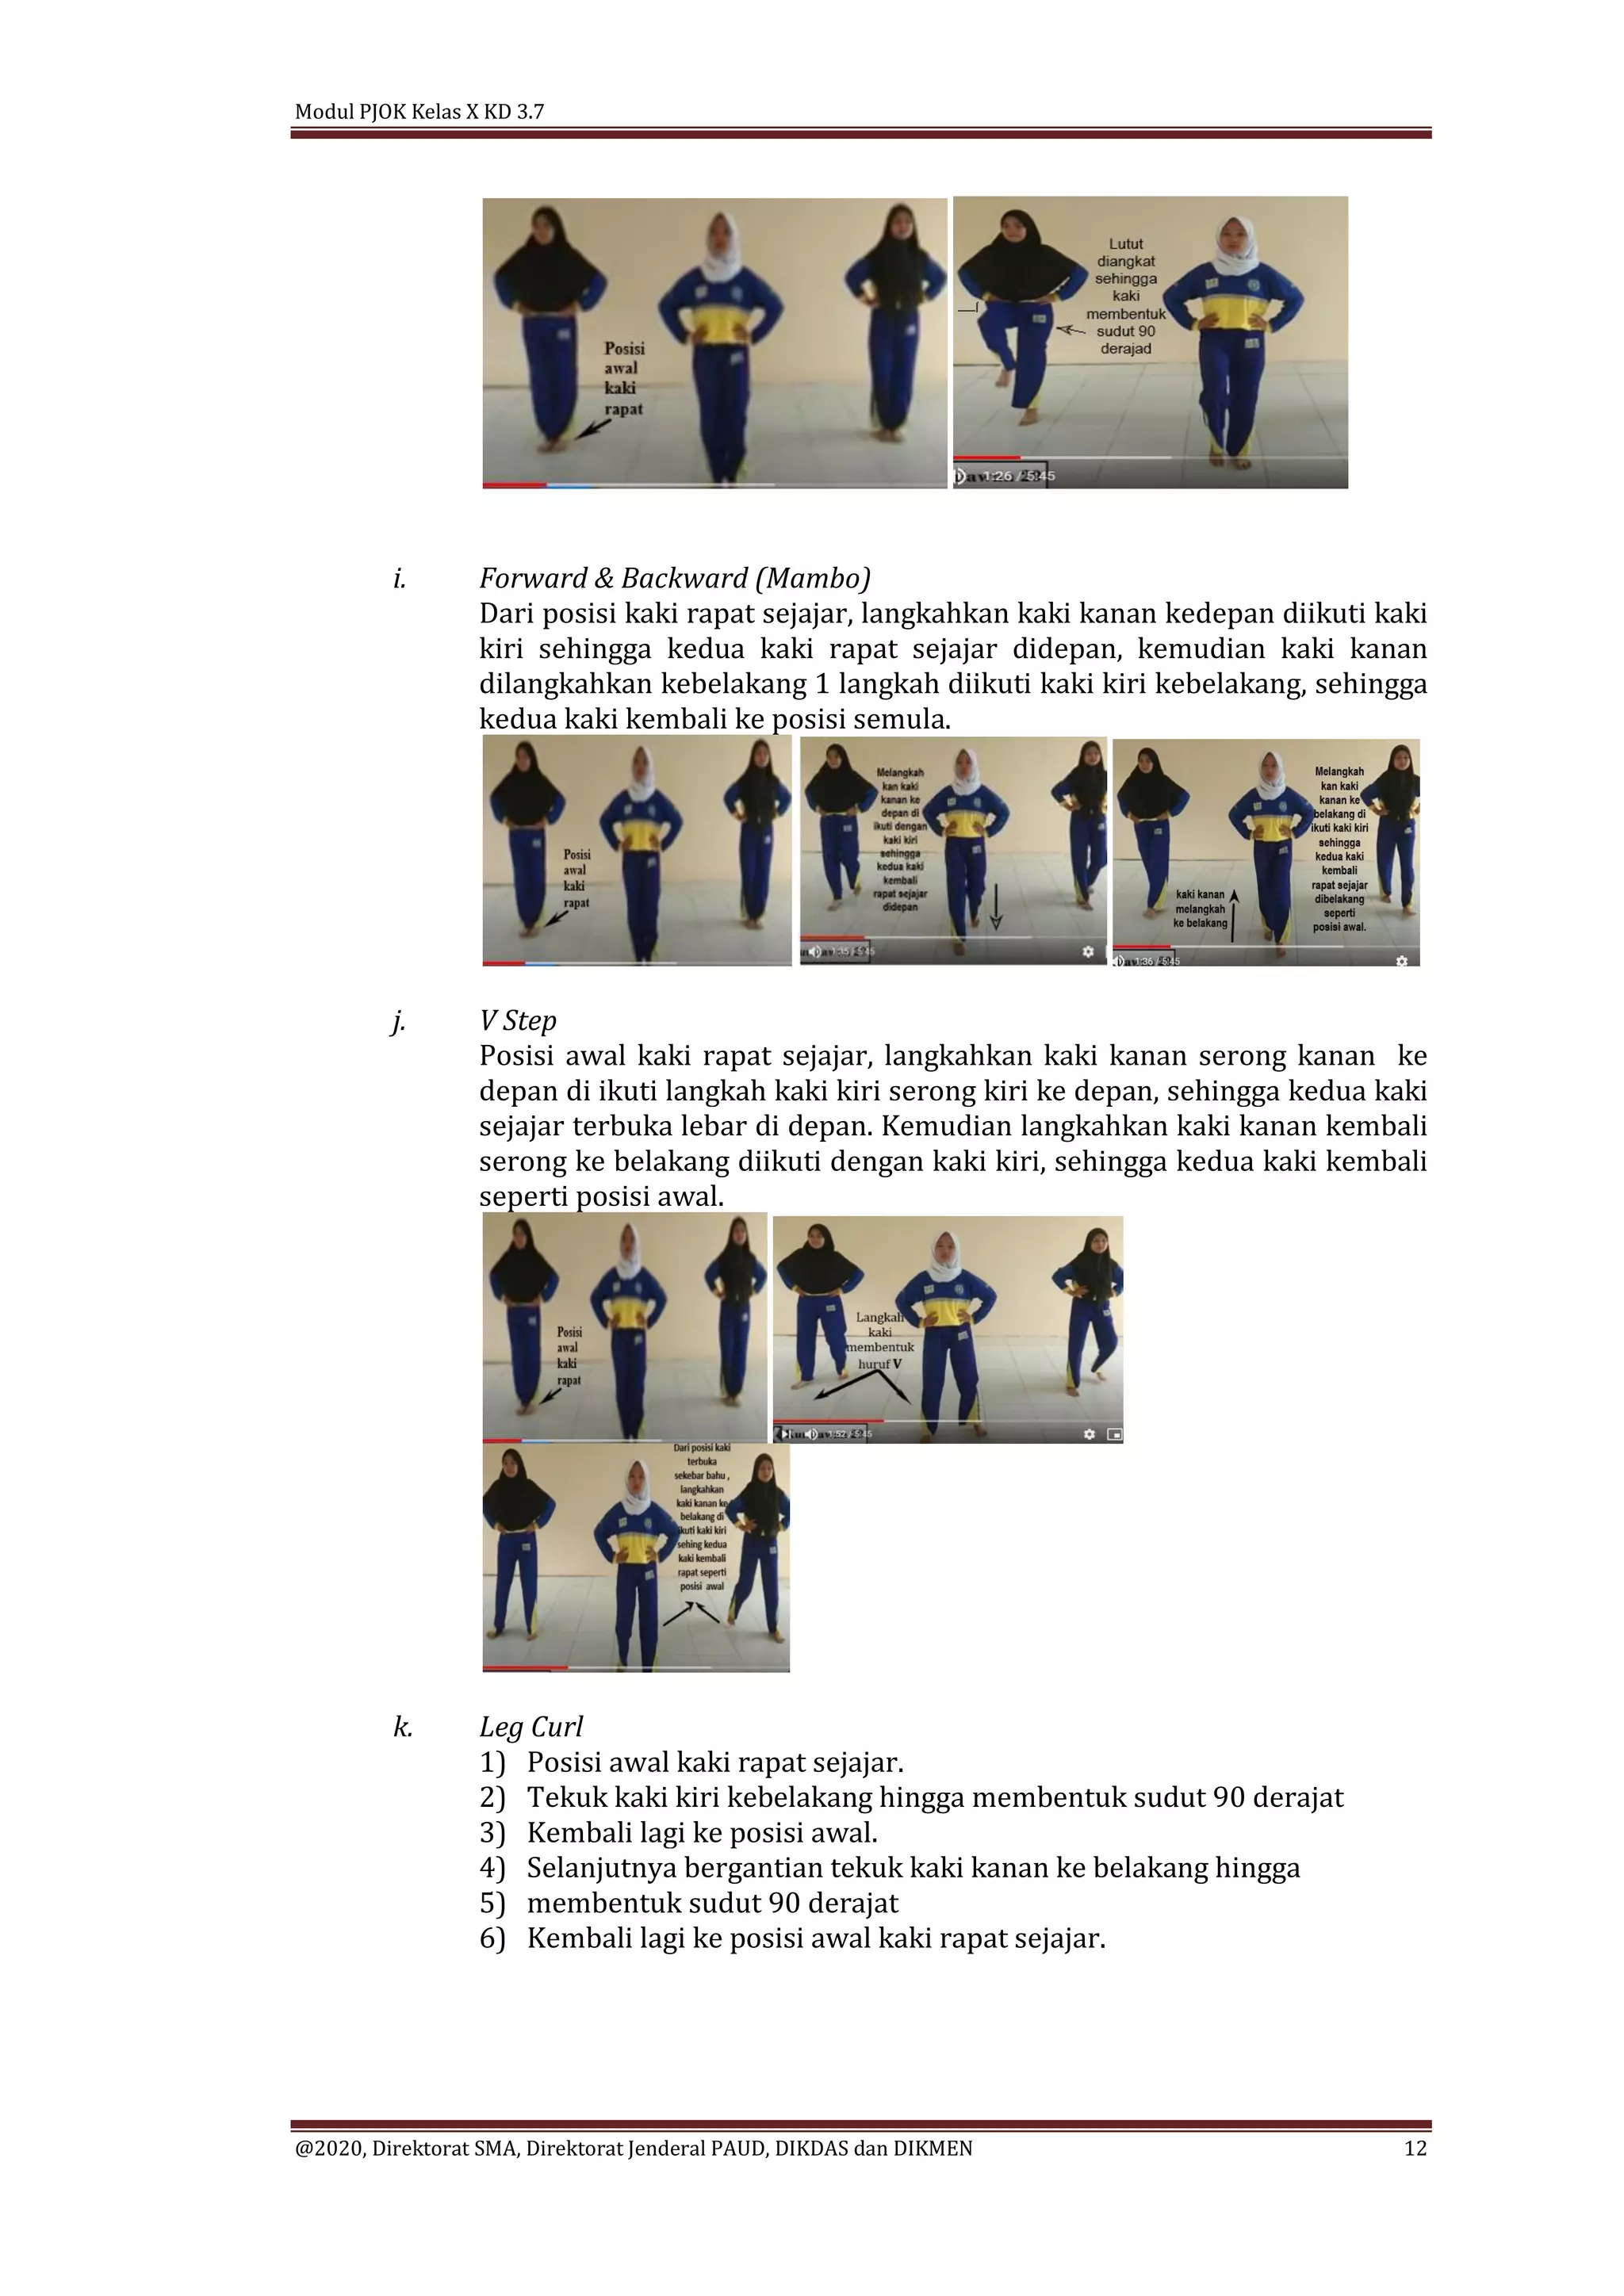 Dari posisi awal kaki rapat , langkahkan kaki kanan bergantian dengan kaki kiri ke depan satu kali d